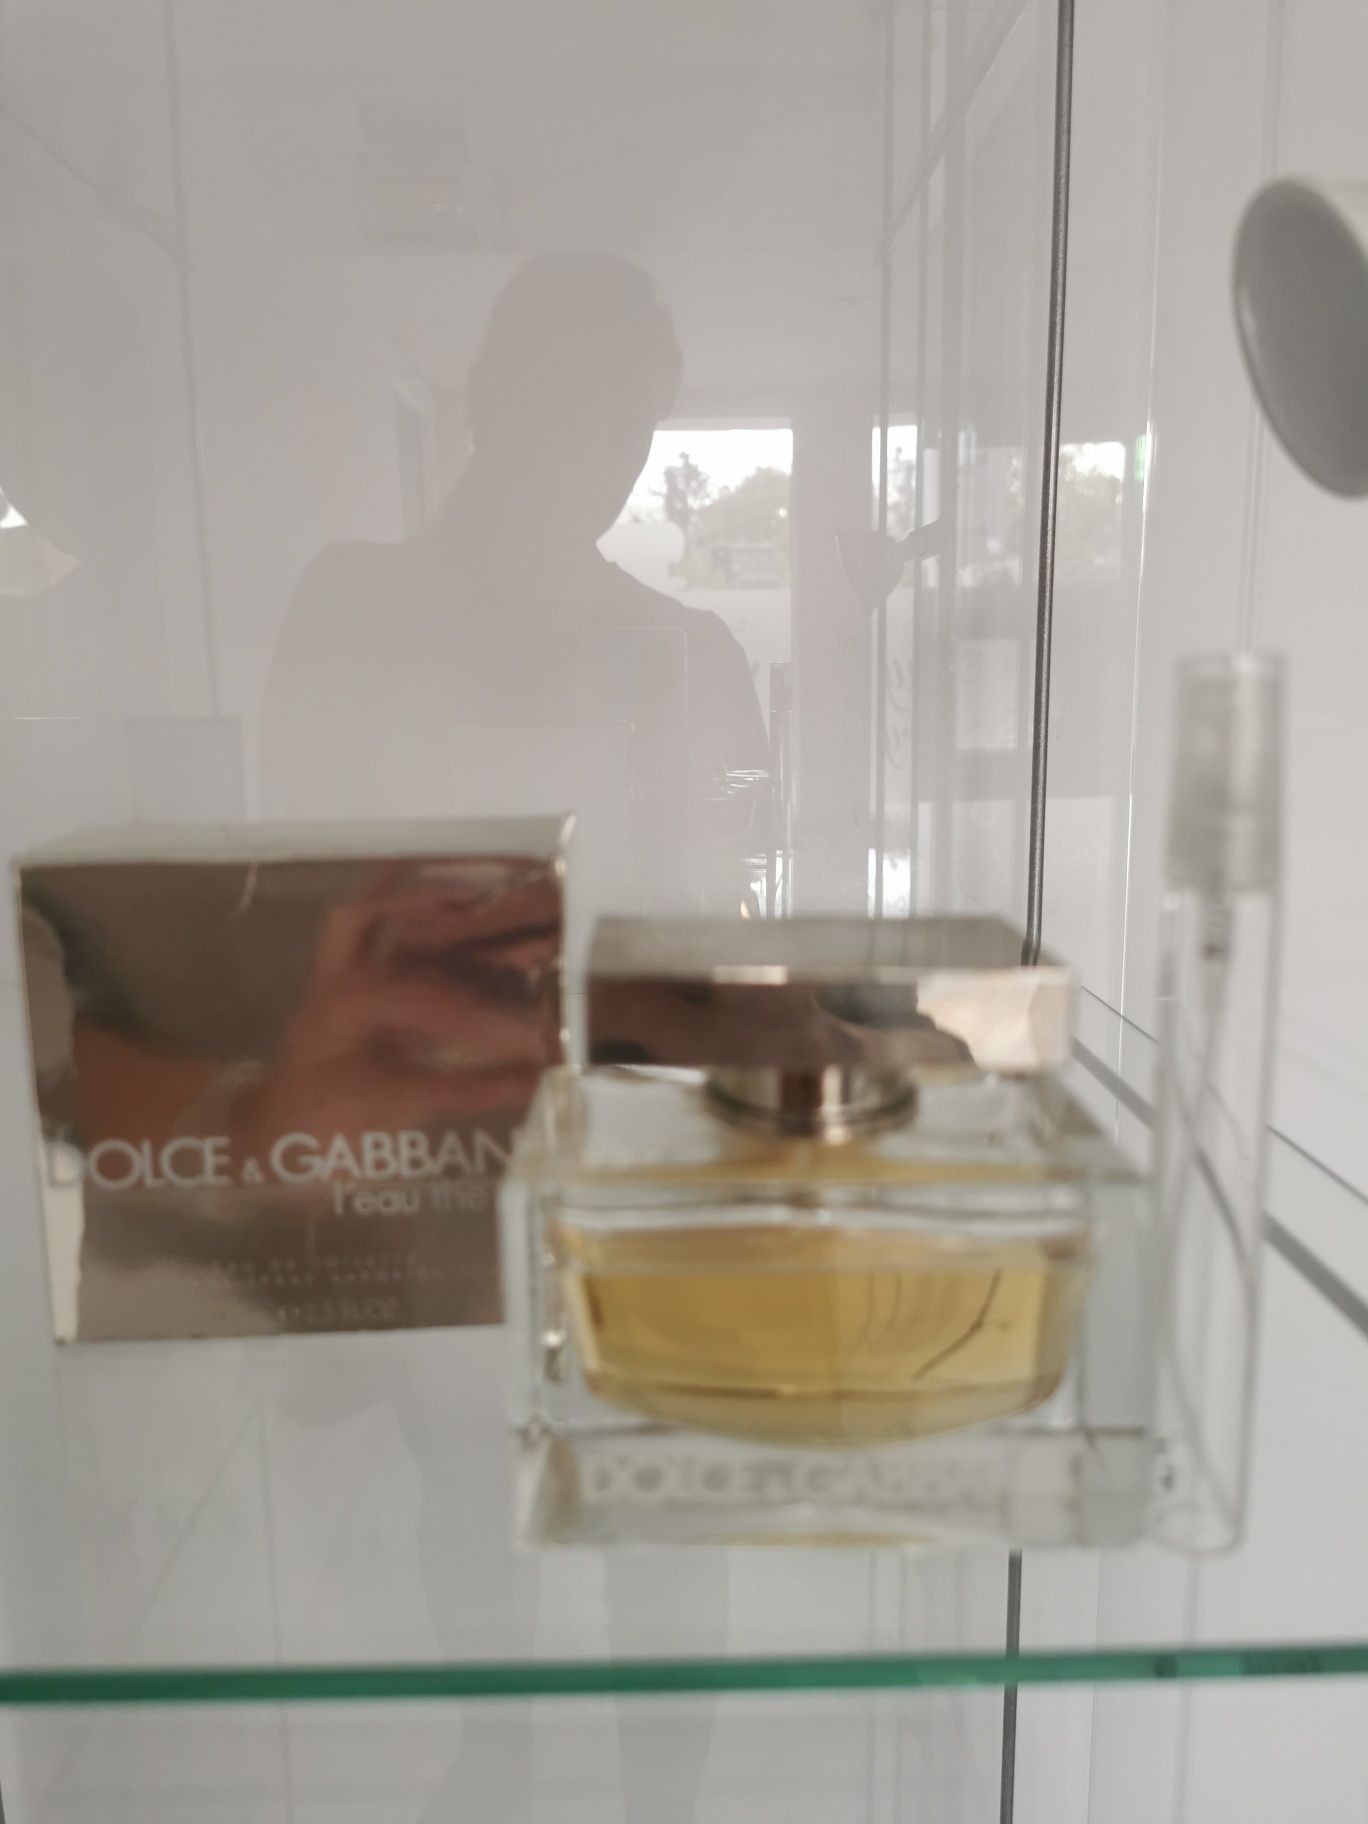 Dolce&Gabbana l'eau the one